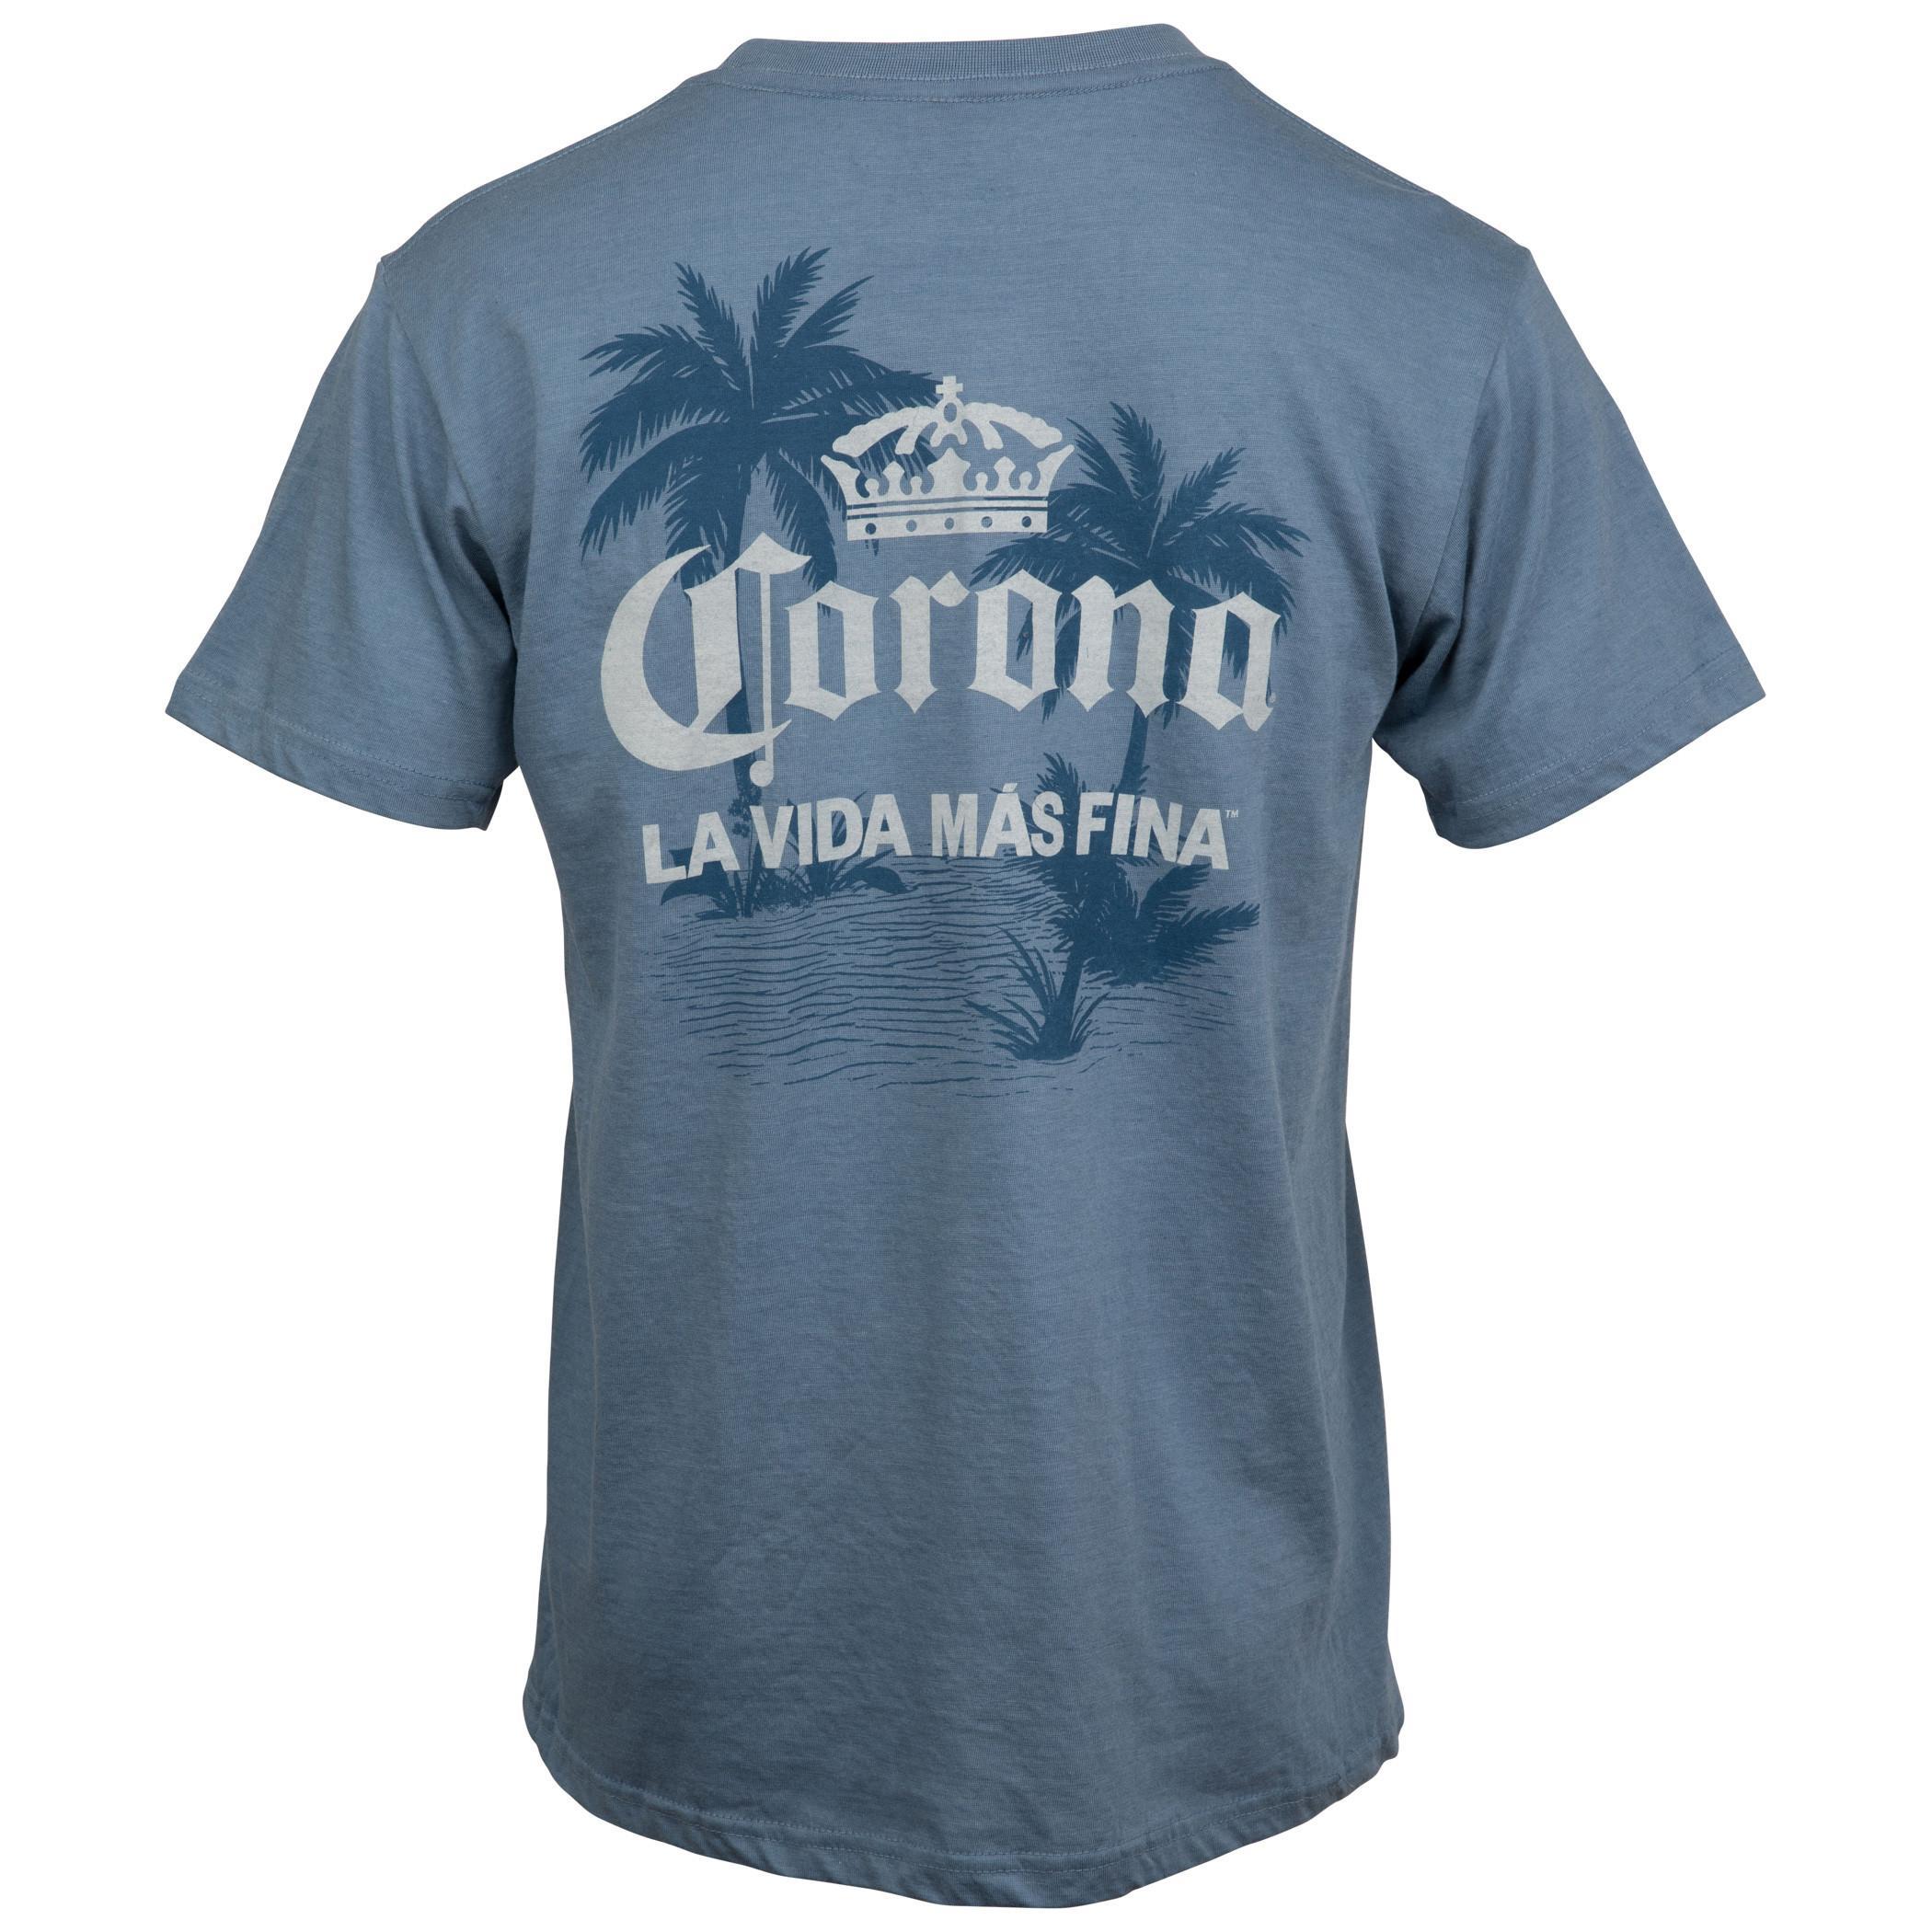 Corona Extra La Vida Mas Fina Palm Trees Front and Back Print T-Shirt Large